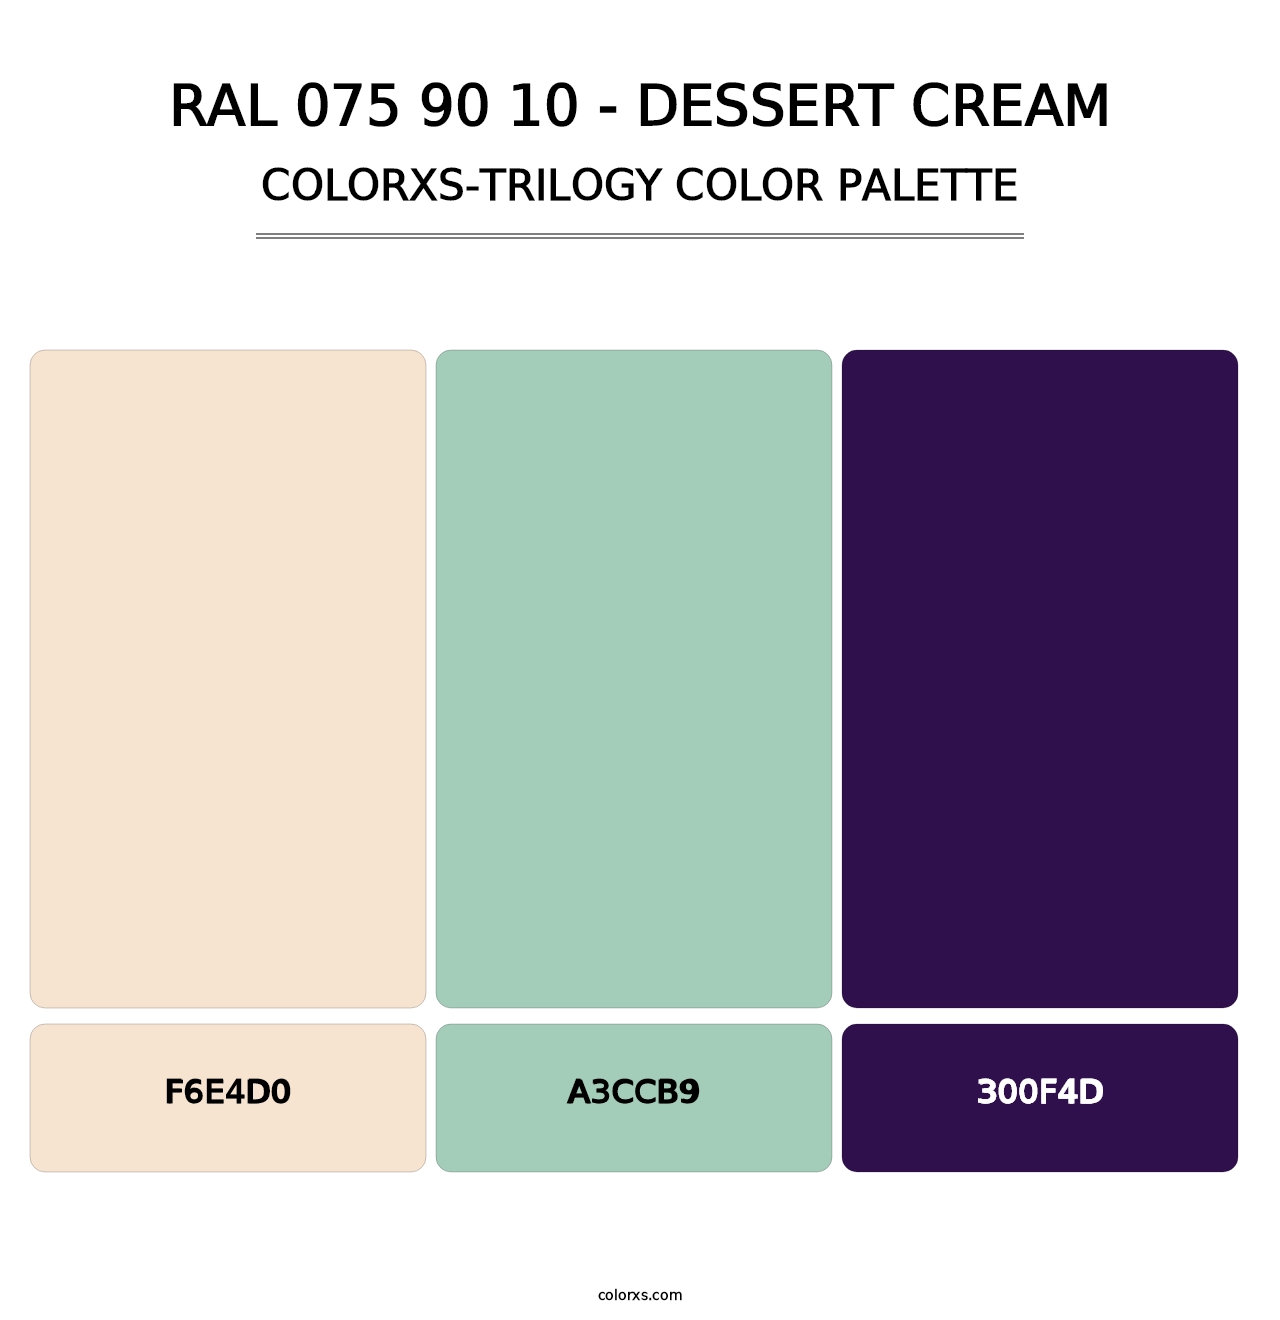 RAL 075 90 10 - Dessert Cream - Colorxs Trilogy Palette